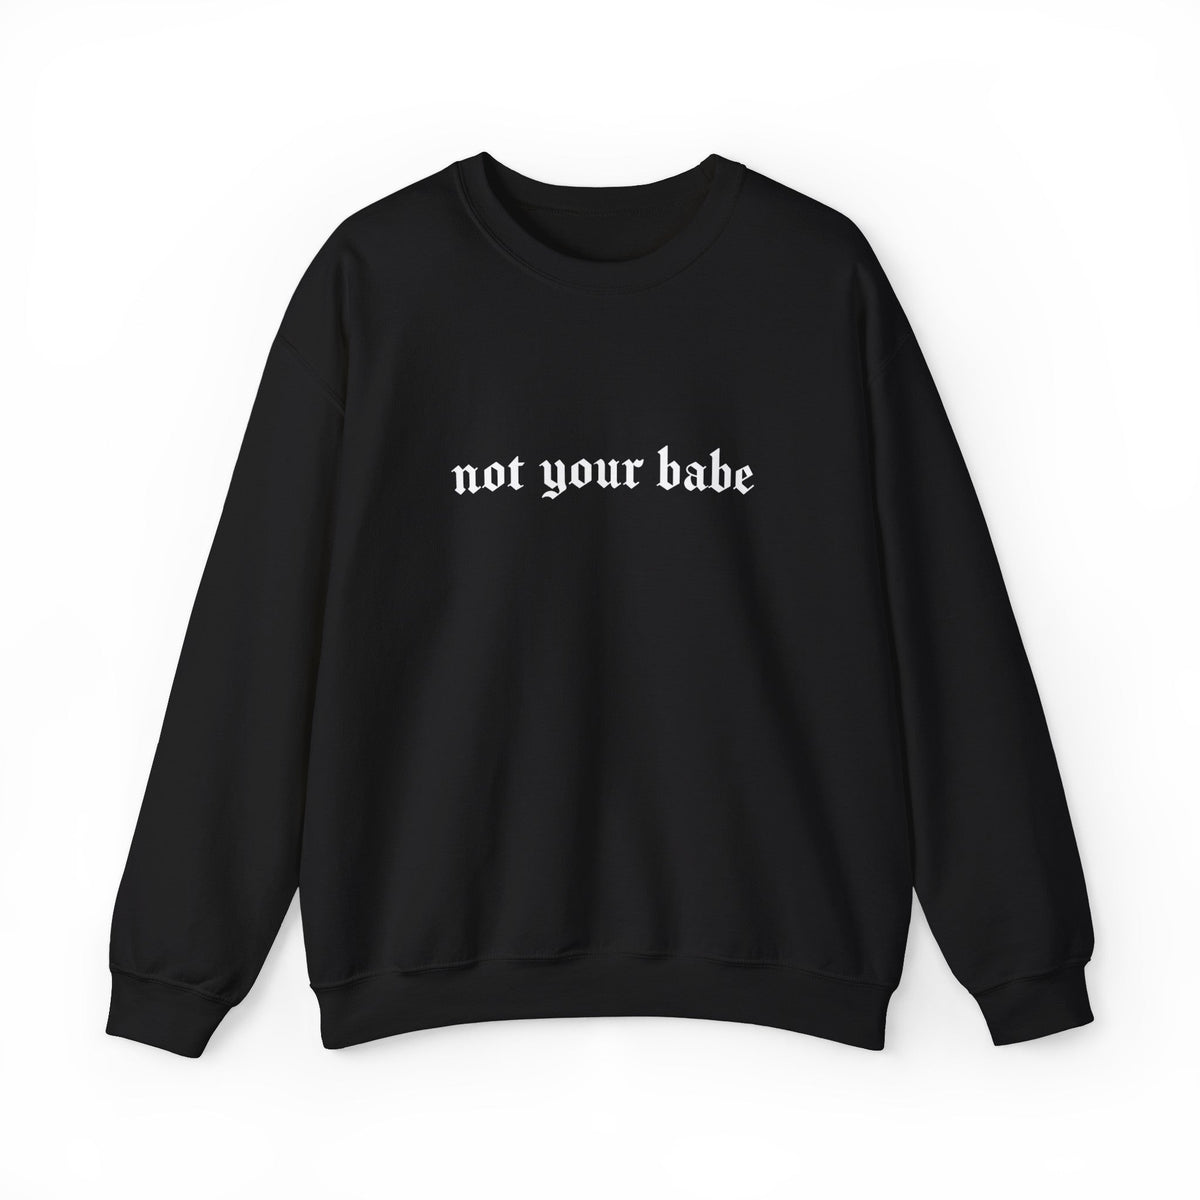 Not Your Babe Classic Goth Crew Neck Sweatshirt - Goth Cloth Co.Sweatshirt24143627885419214910